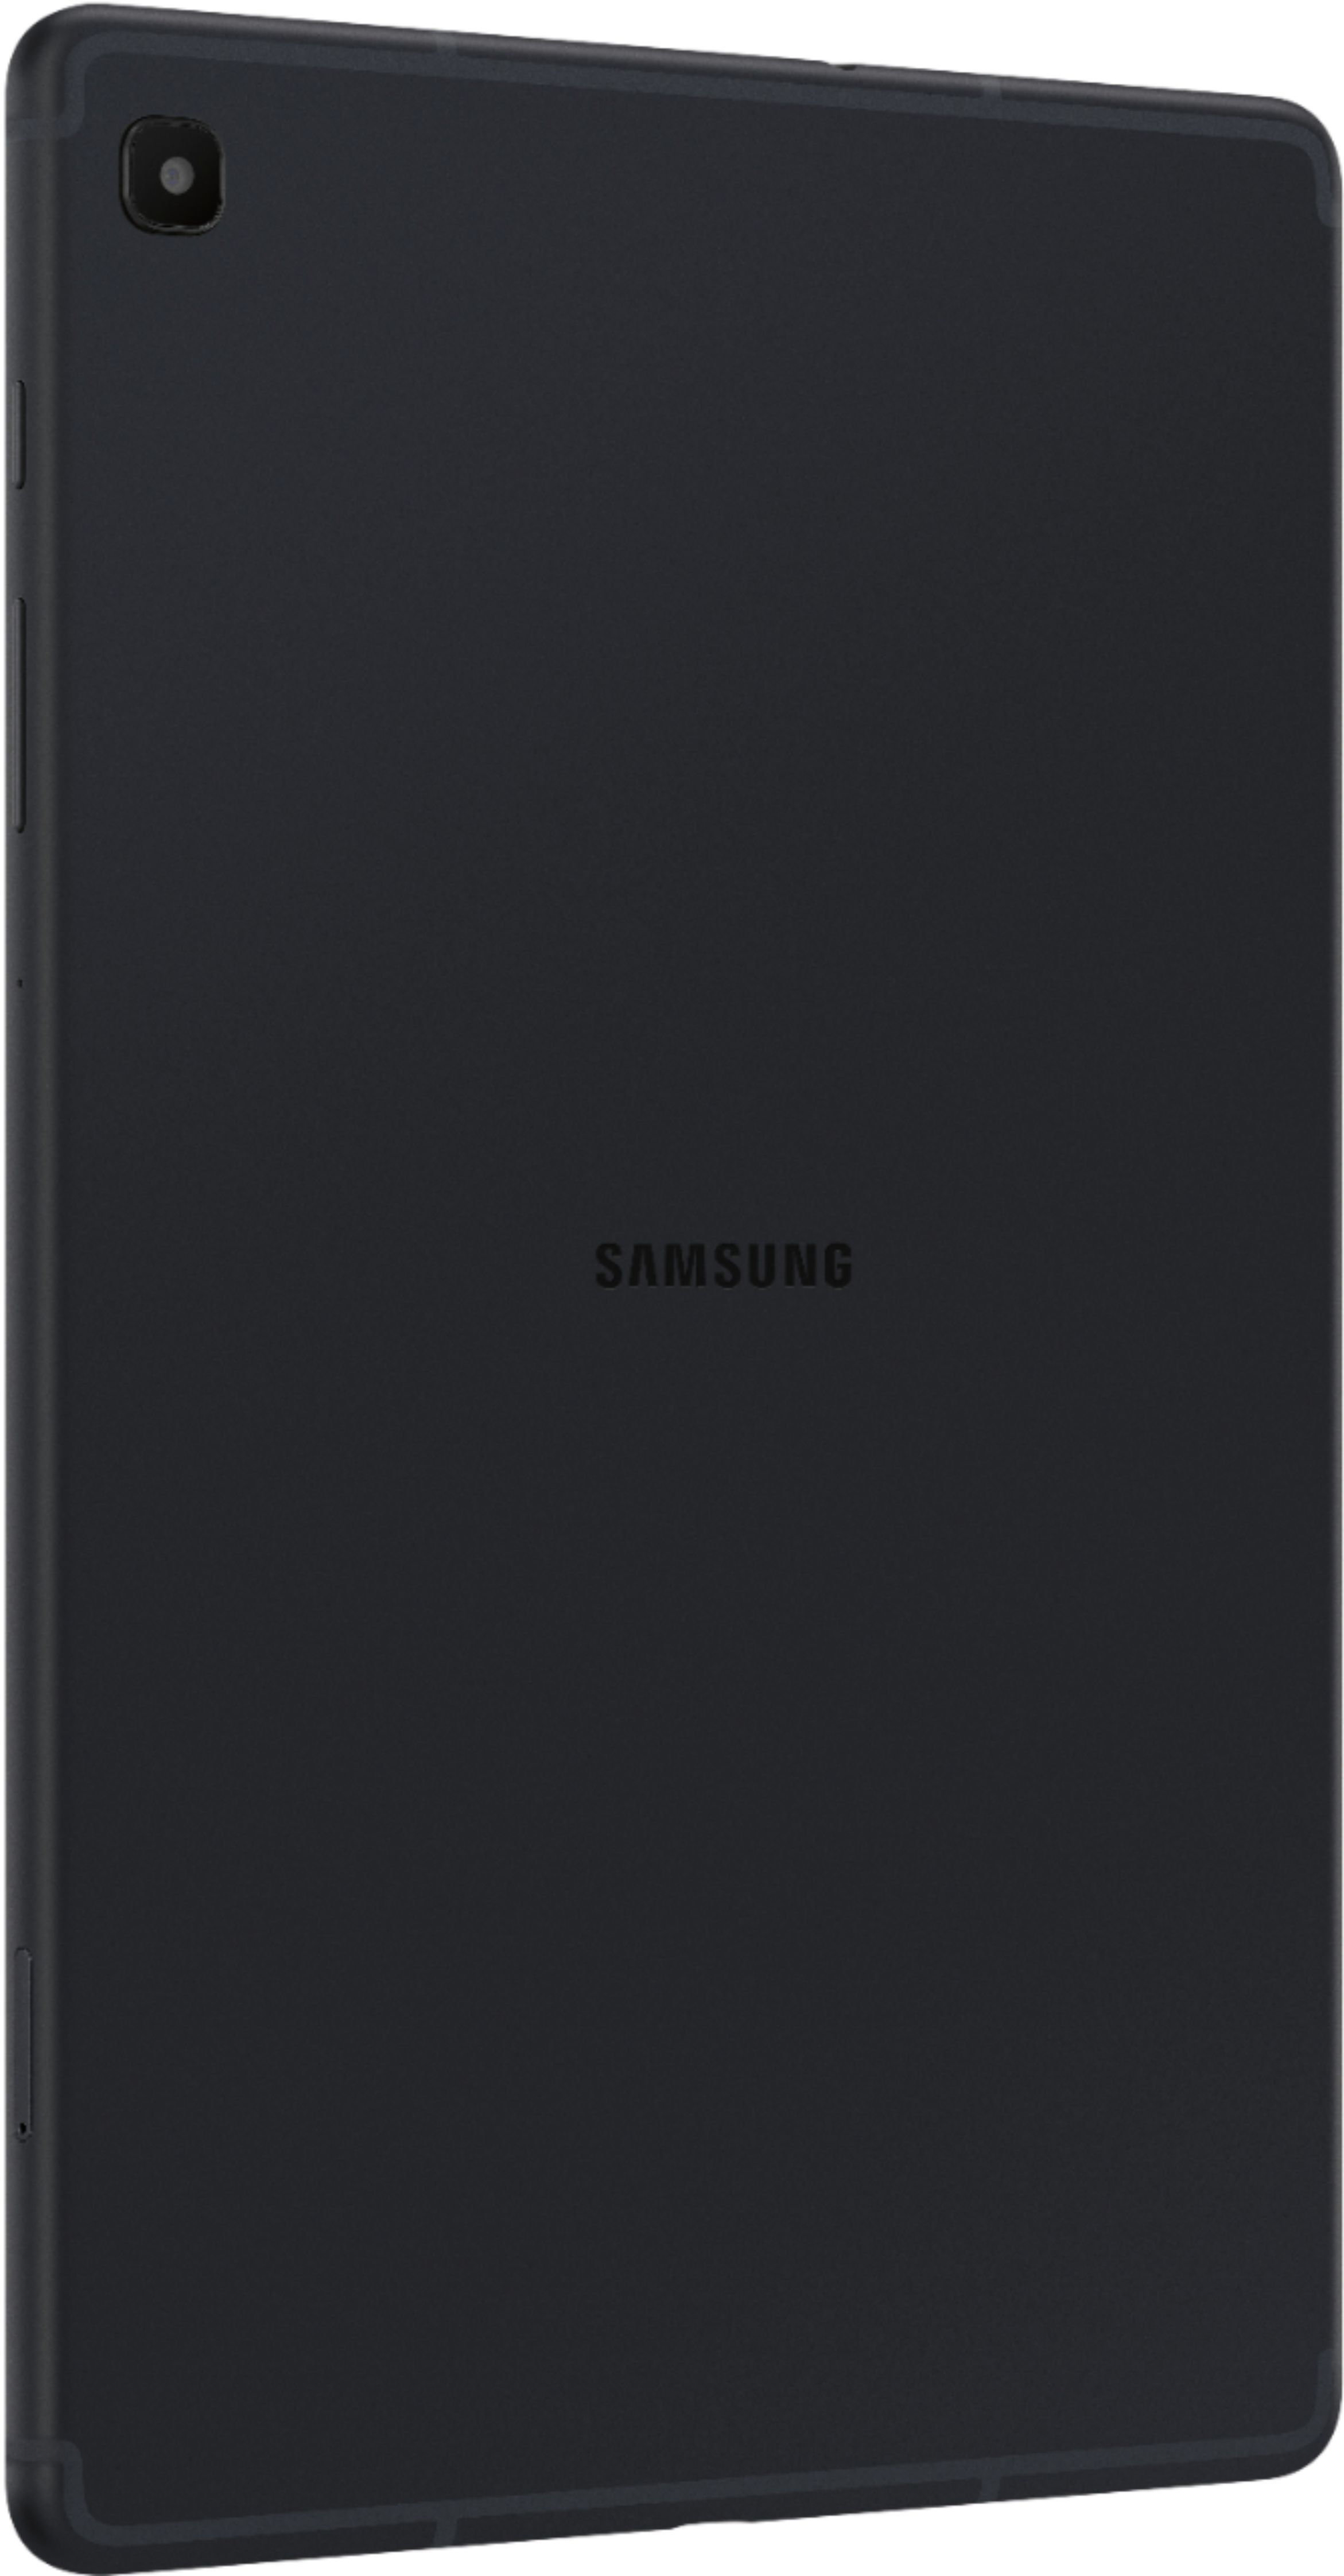 Samsung Galaxy Tab S6 Lite With 64gb Storage : Target